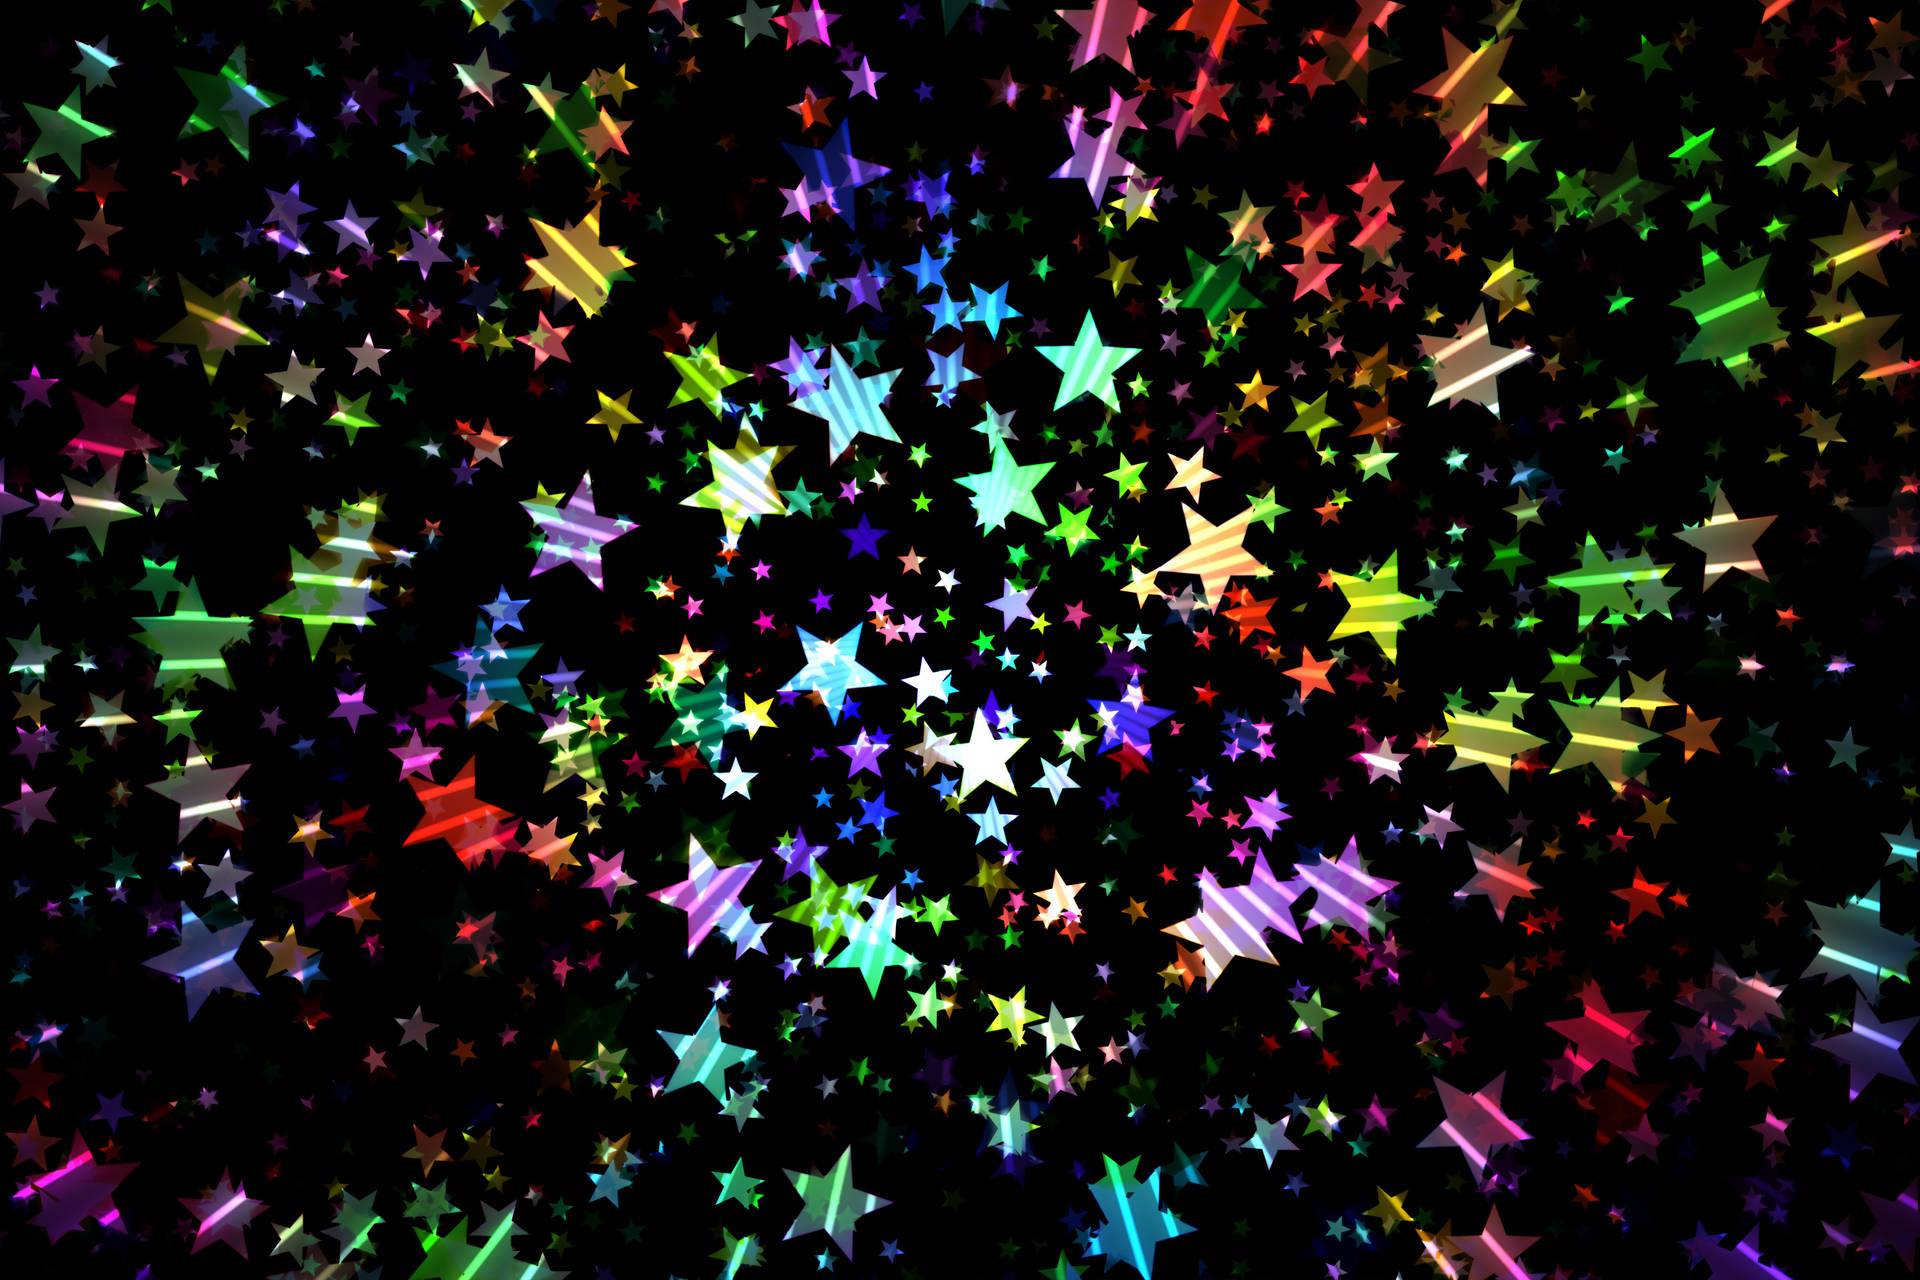 stars wallpaper